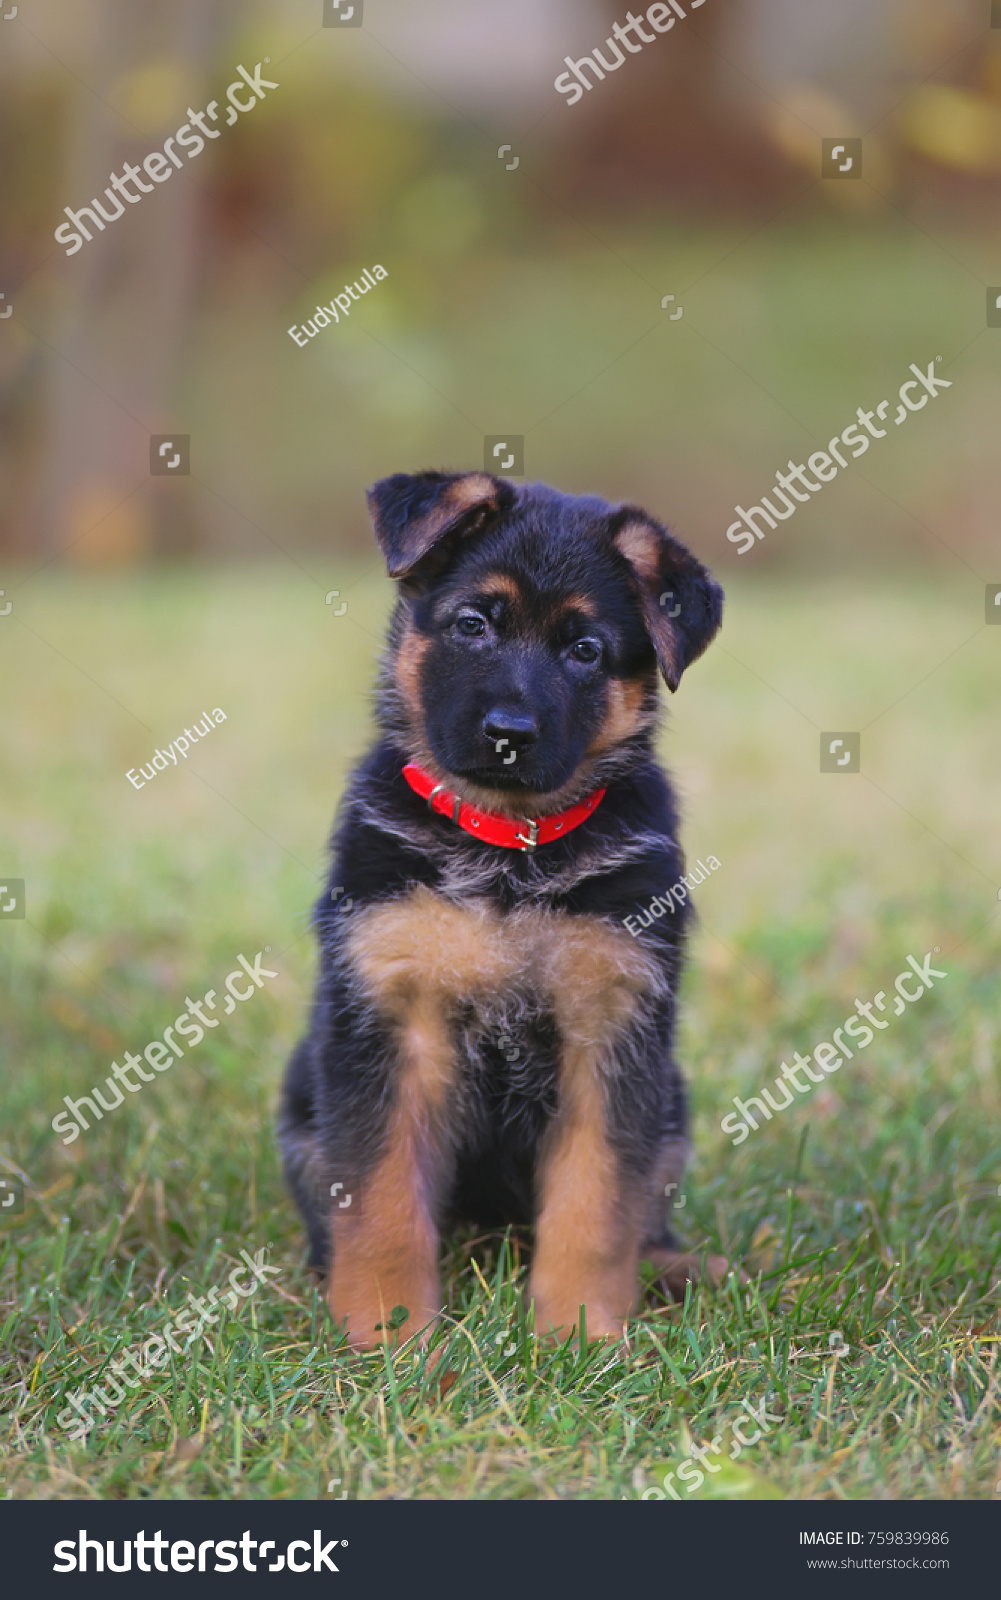 Cute Shorthaired German Shepherd Puppy Wearing Stock Photo Edit Now 759839986